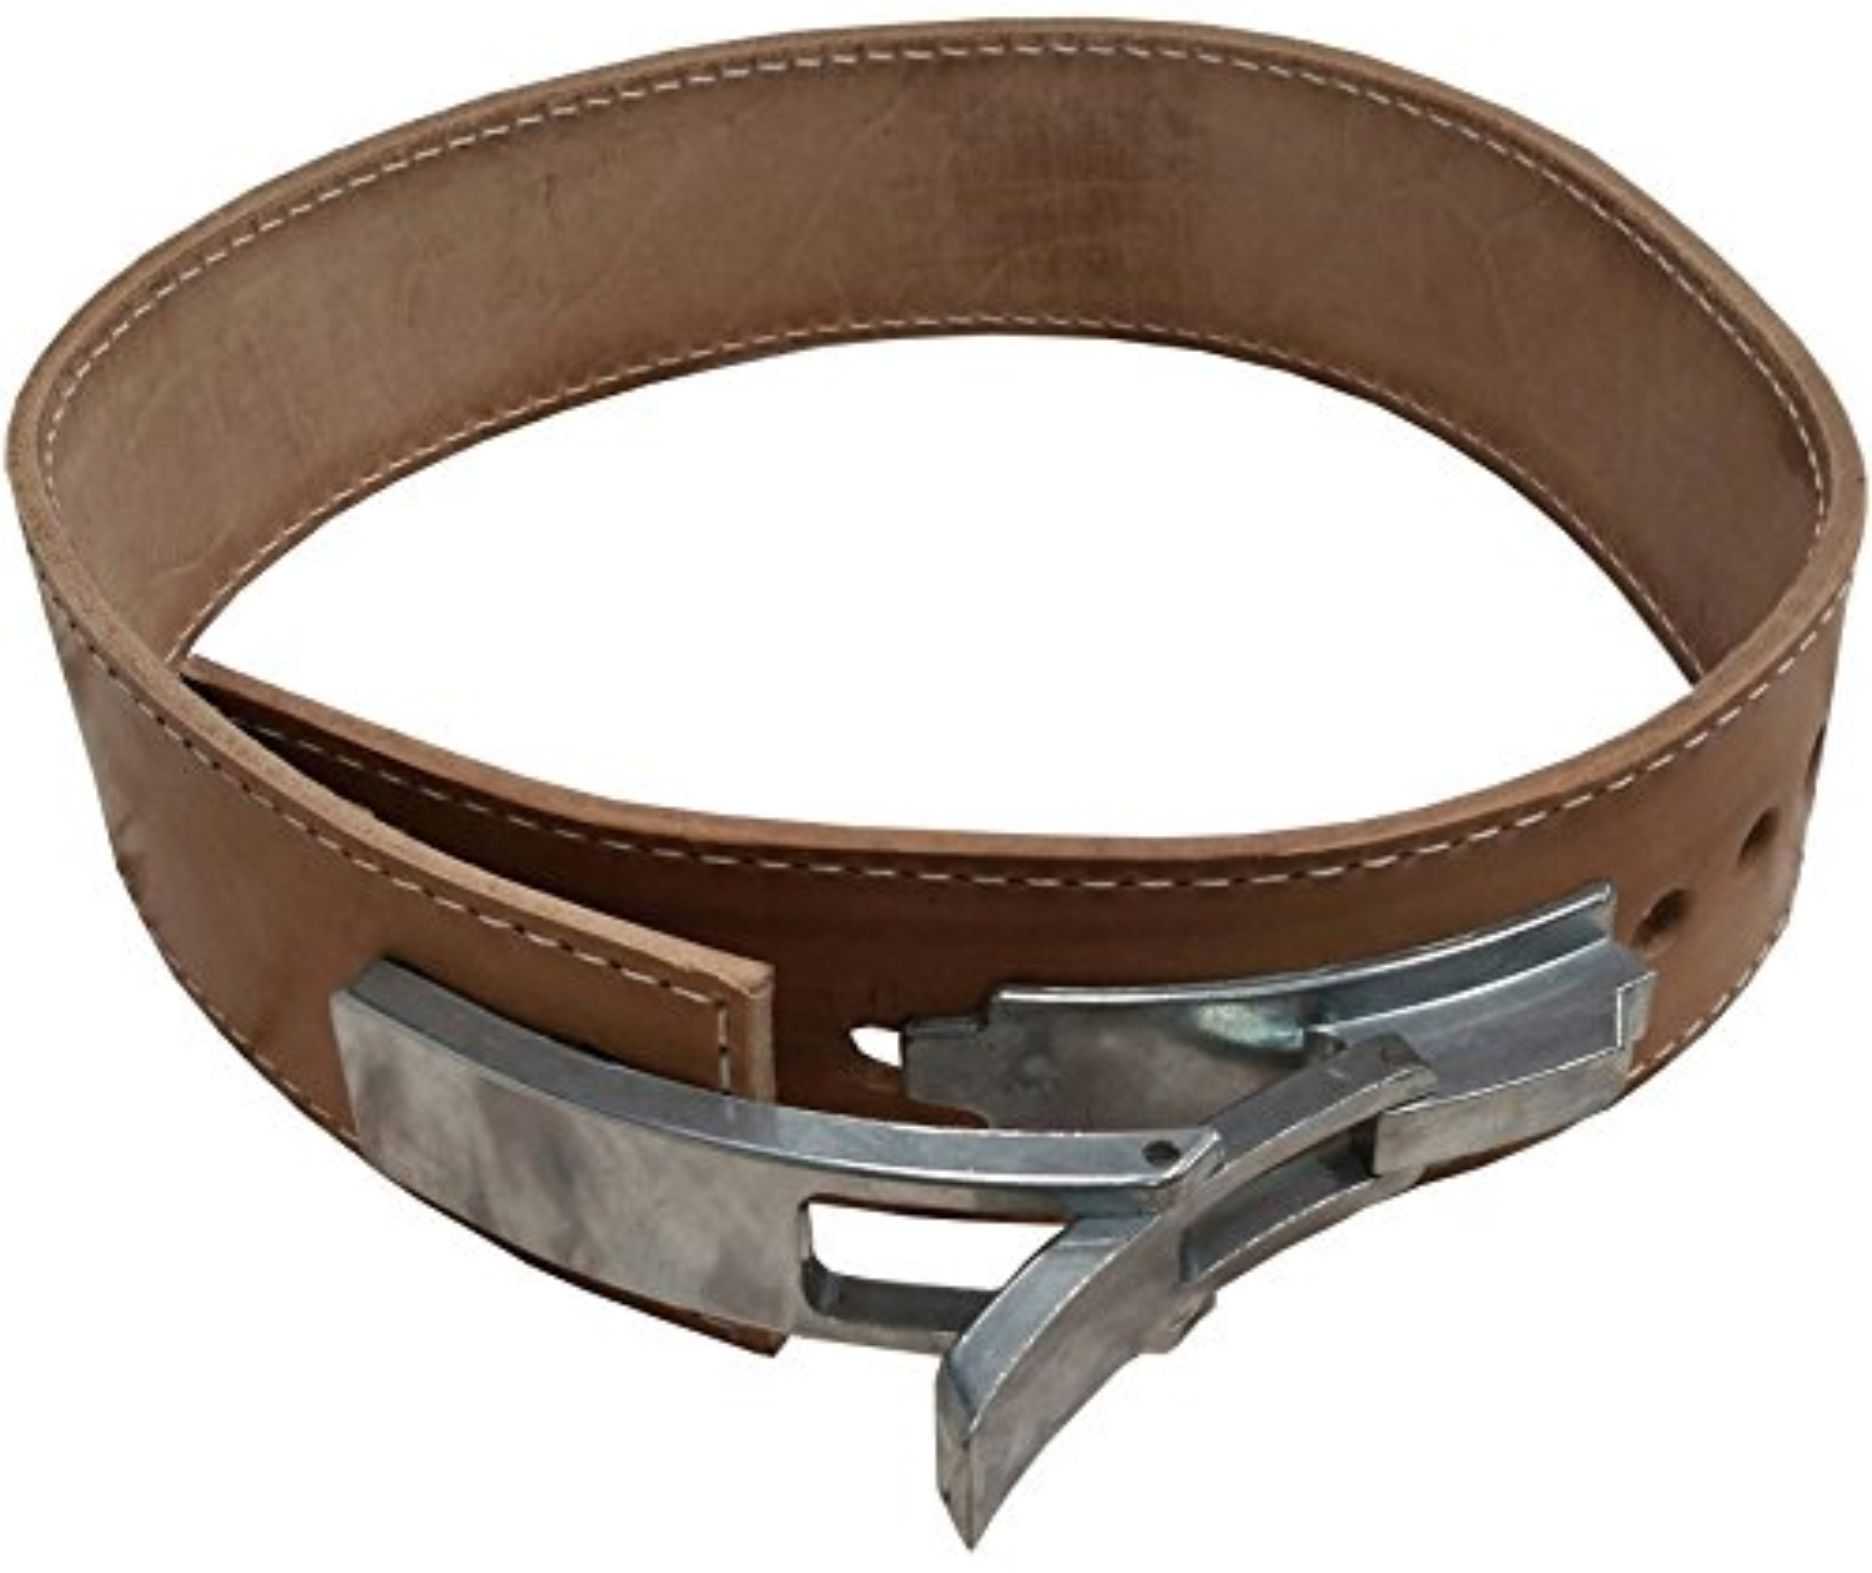 10mm Lever Powerlifting Belt - Strong Lifting Belt - Bench Press